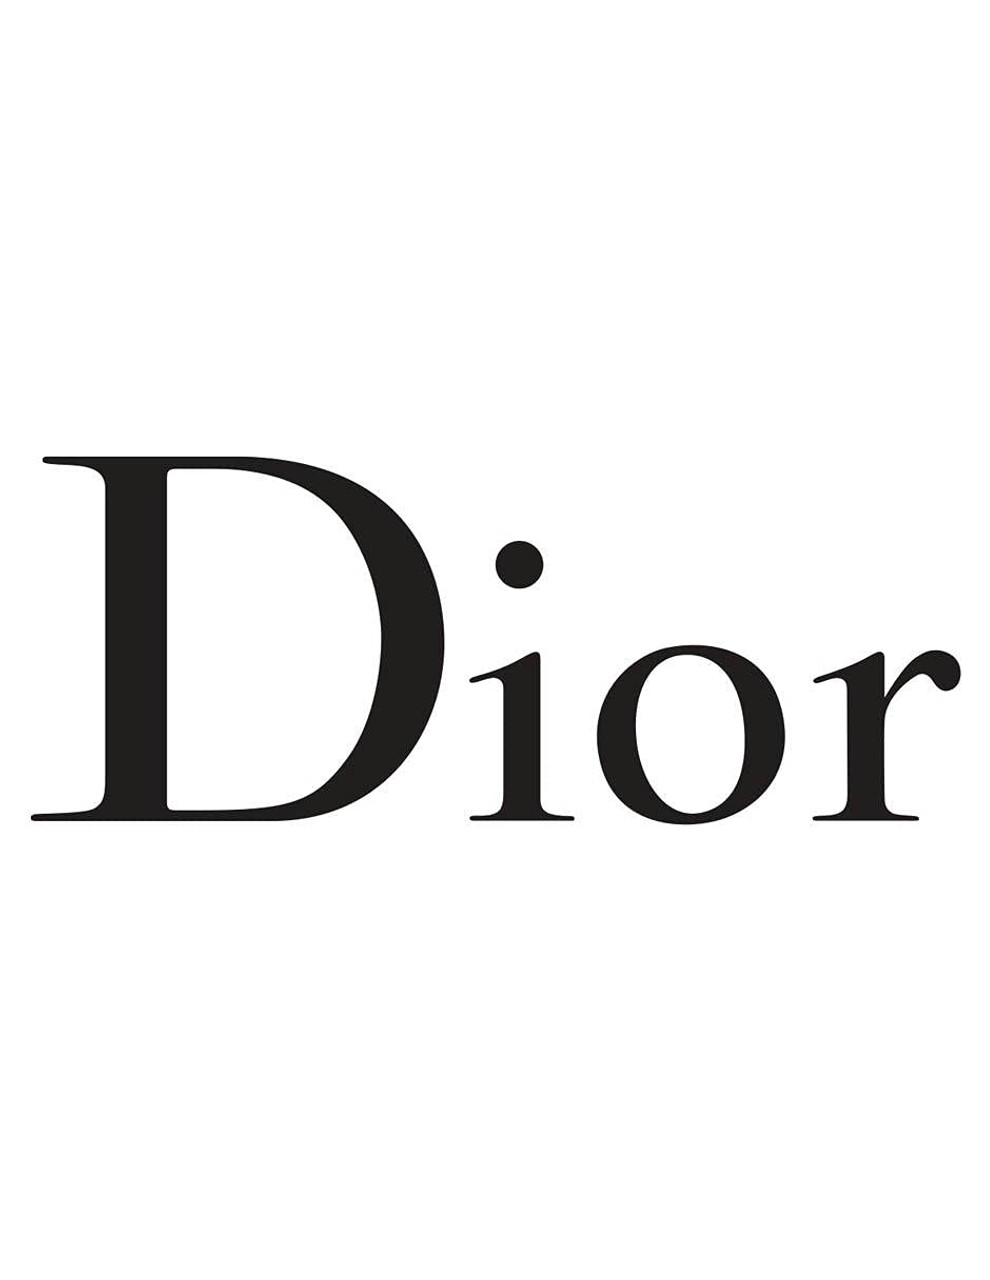 Pure Poison by Christian Dior 1.7oz Eau De Parfum Spray Women